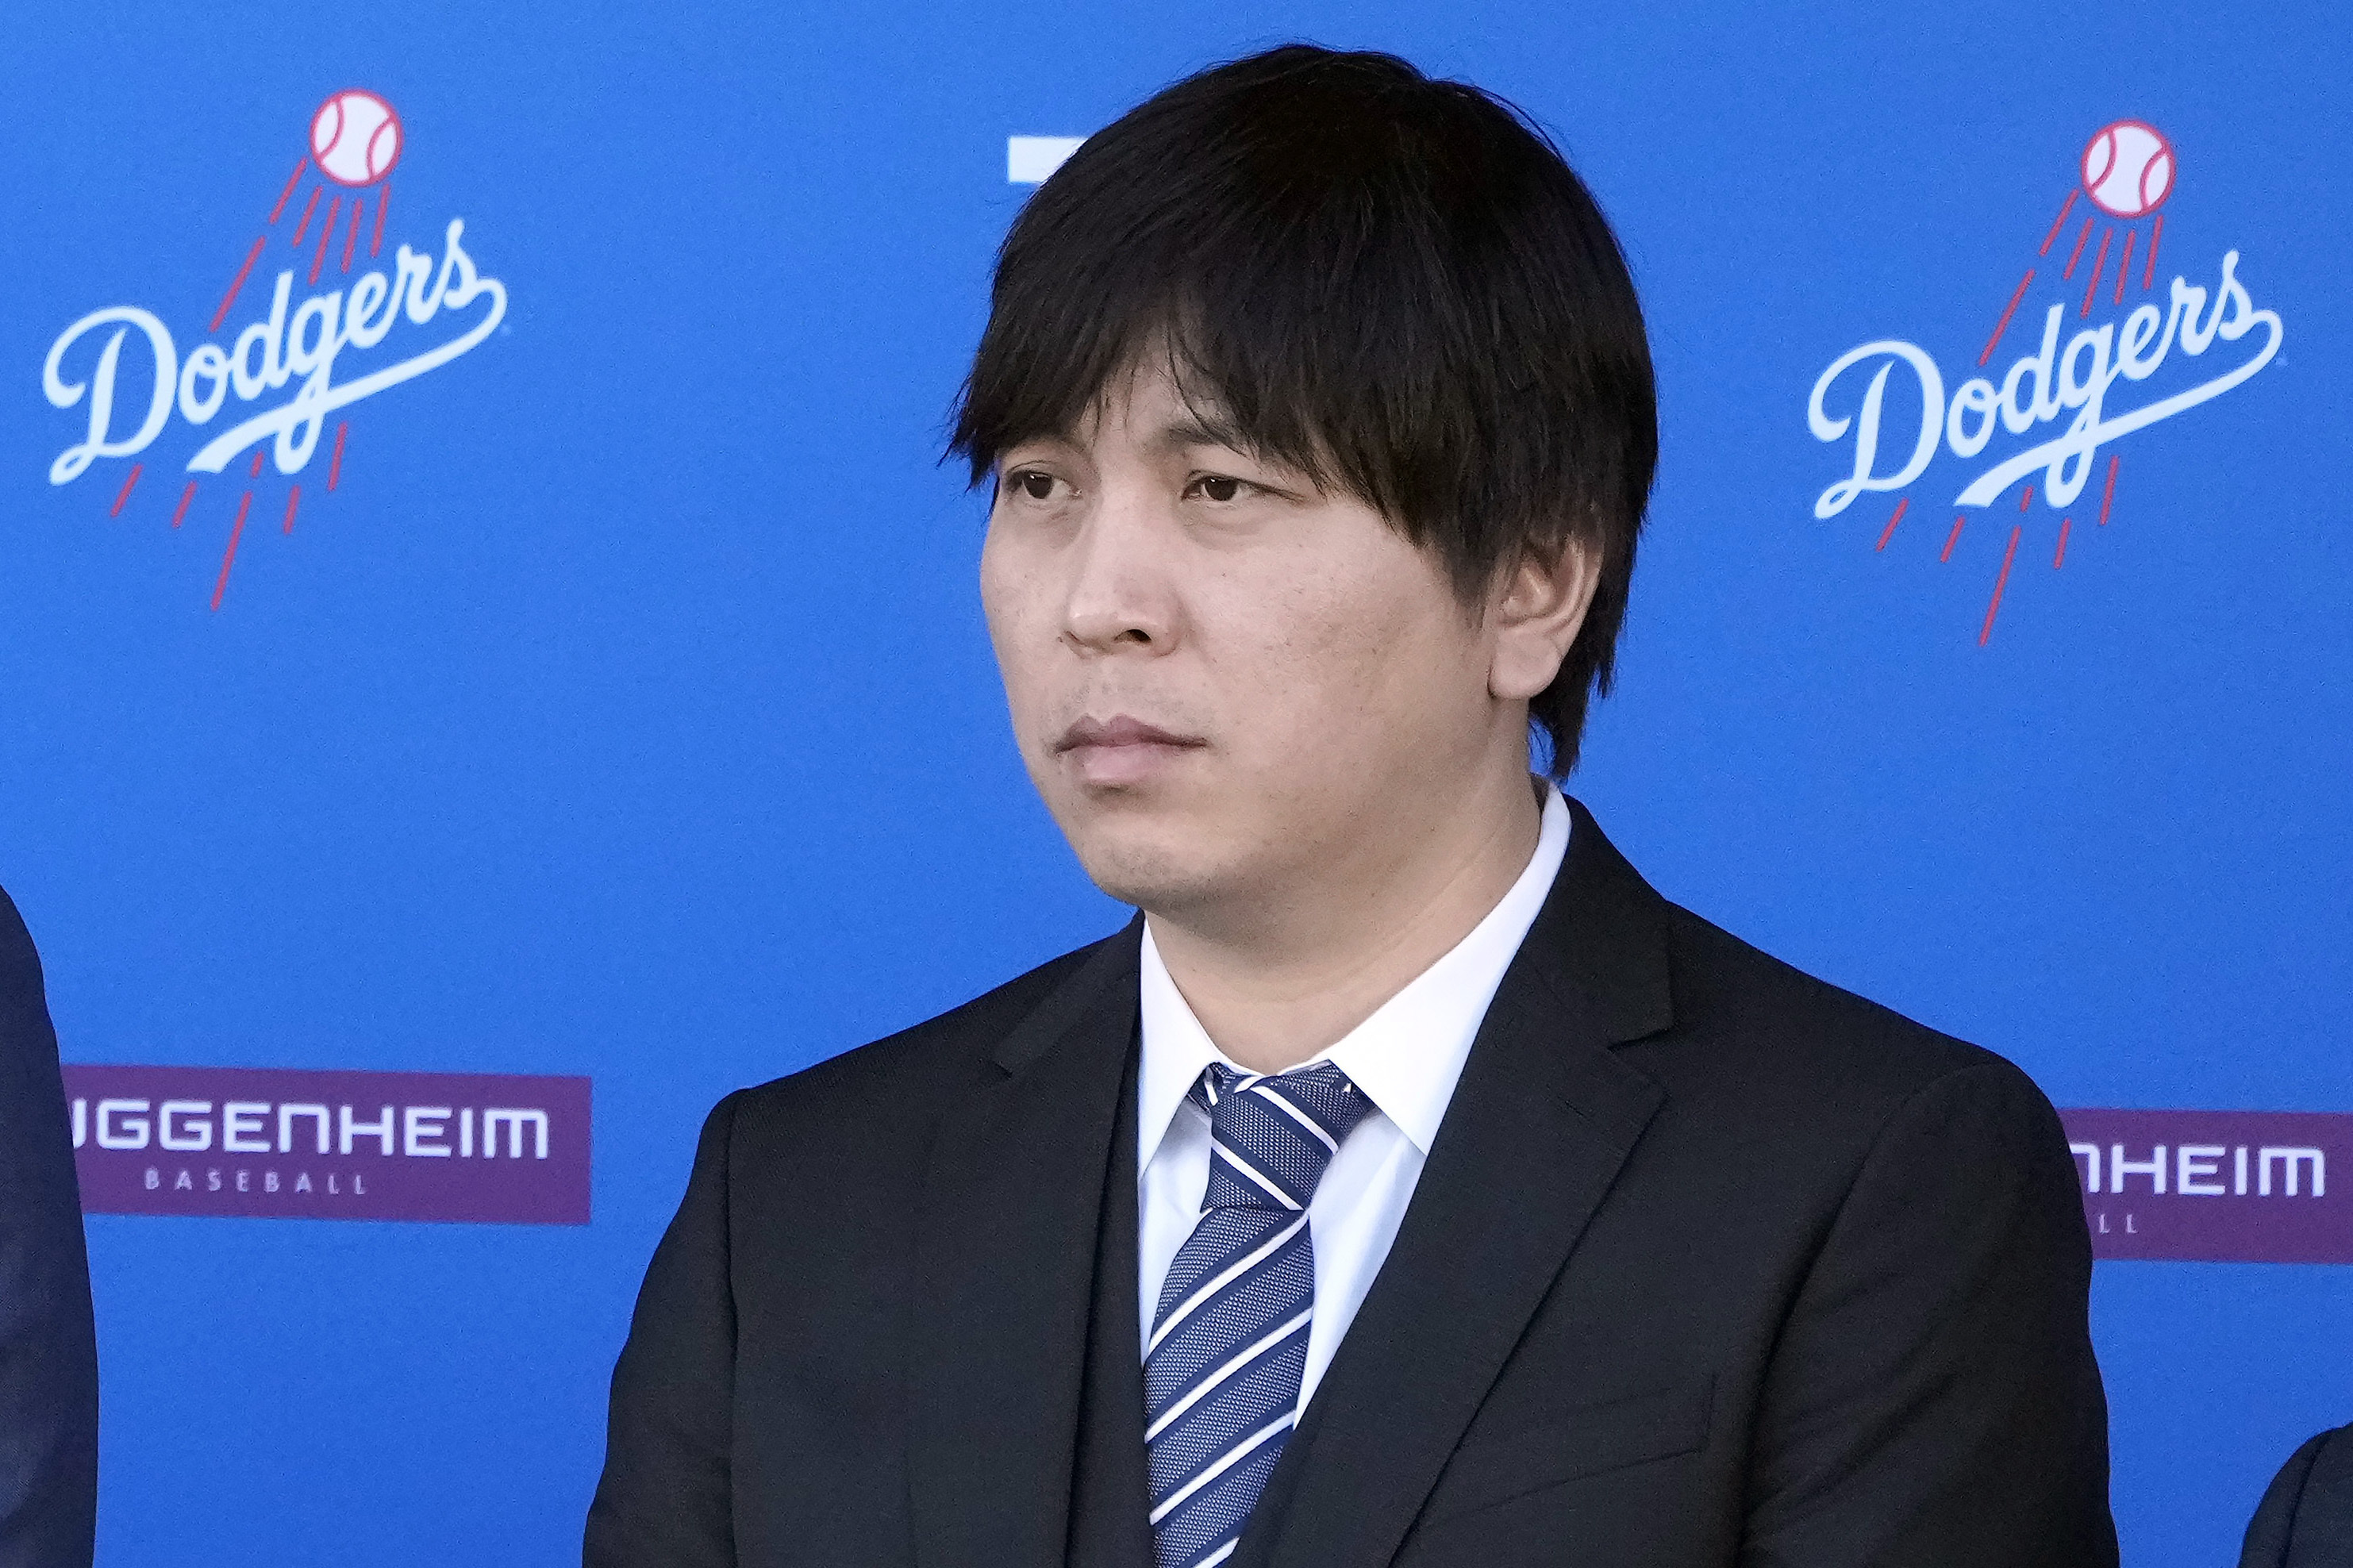 Shohei Ohtani’s Former Interpreter Ippei Mizuhara to Plead Guilty in Betting Case